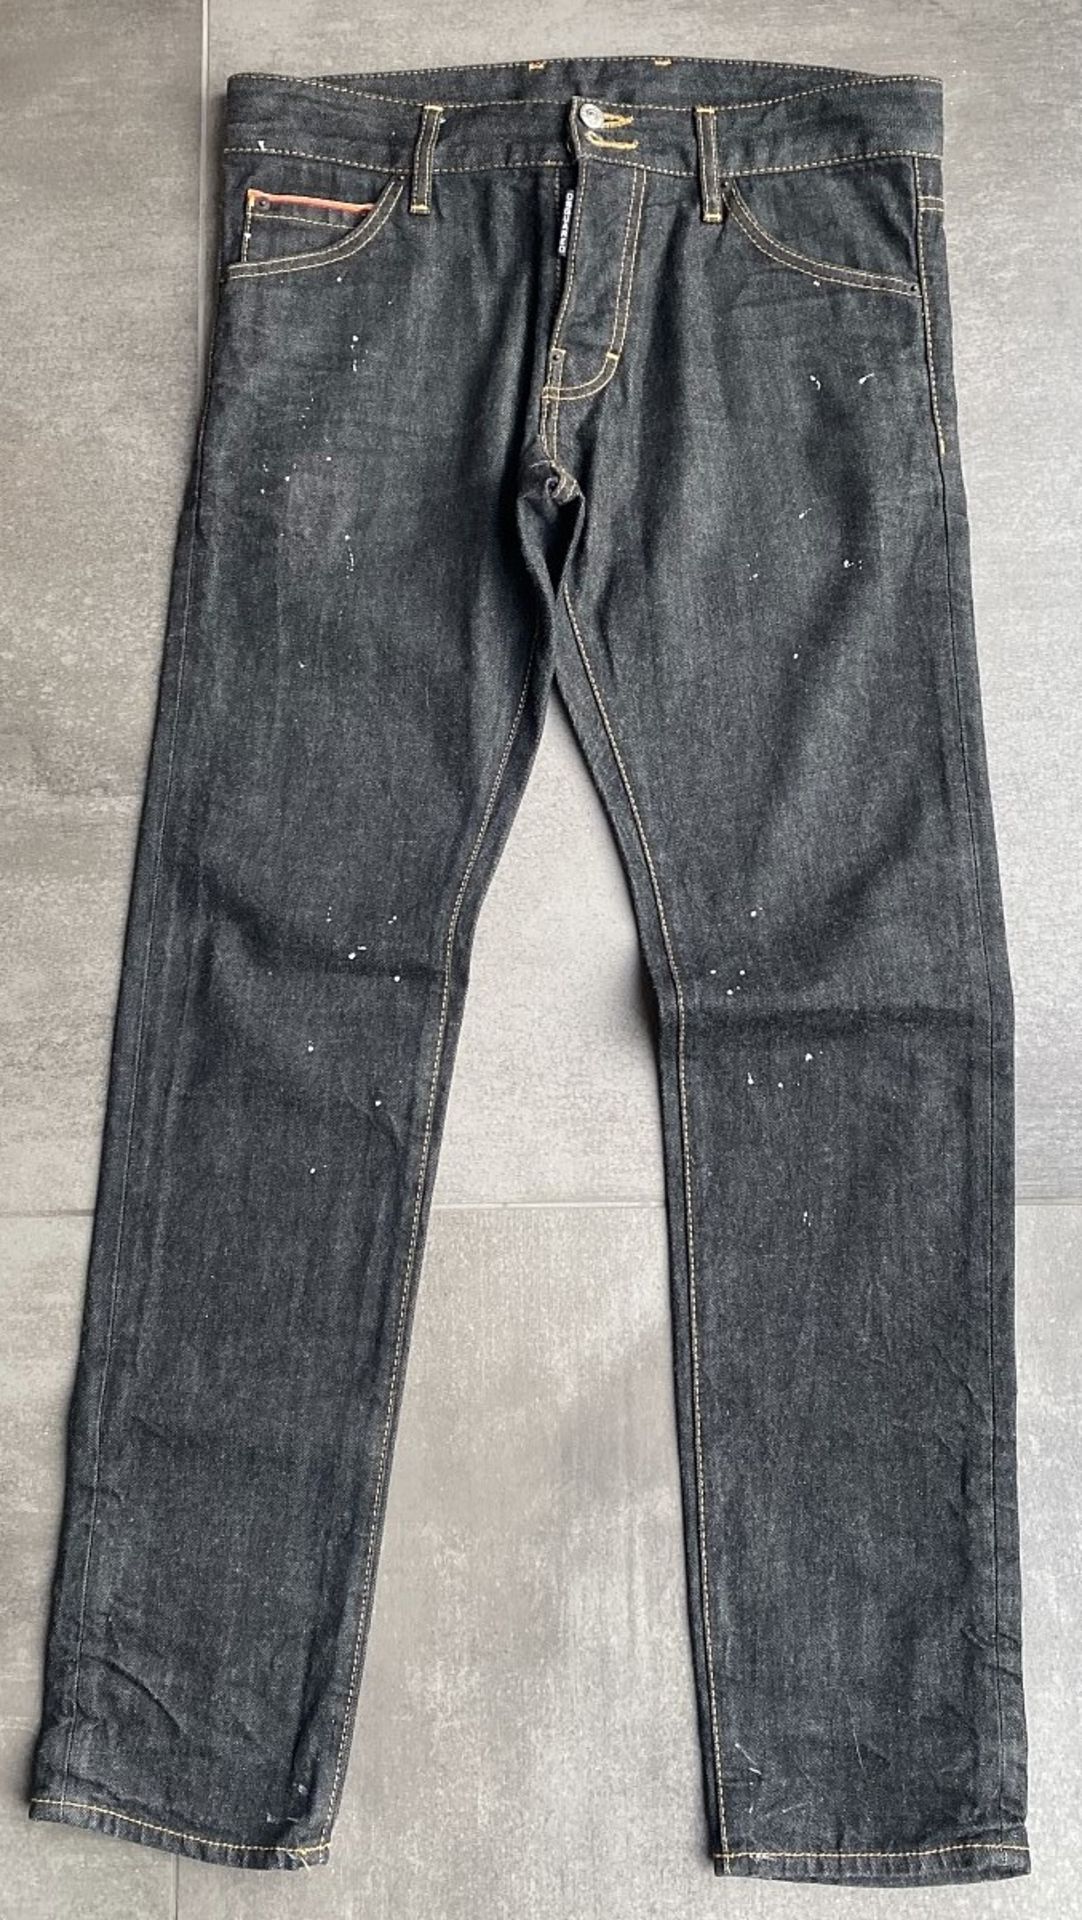 1 x Pair Of Men's Genuine Dsquared2 Distressed-style Designer Jeans In Black - Size: UK 30